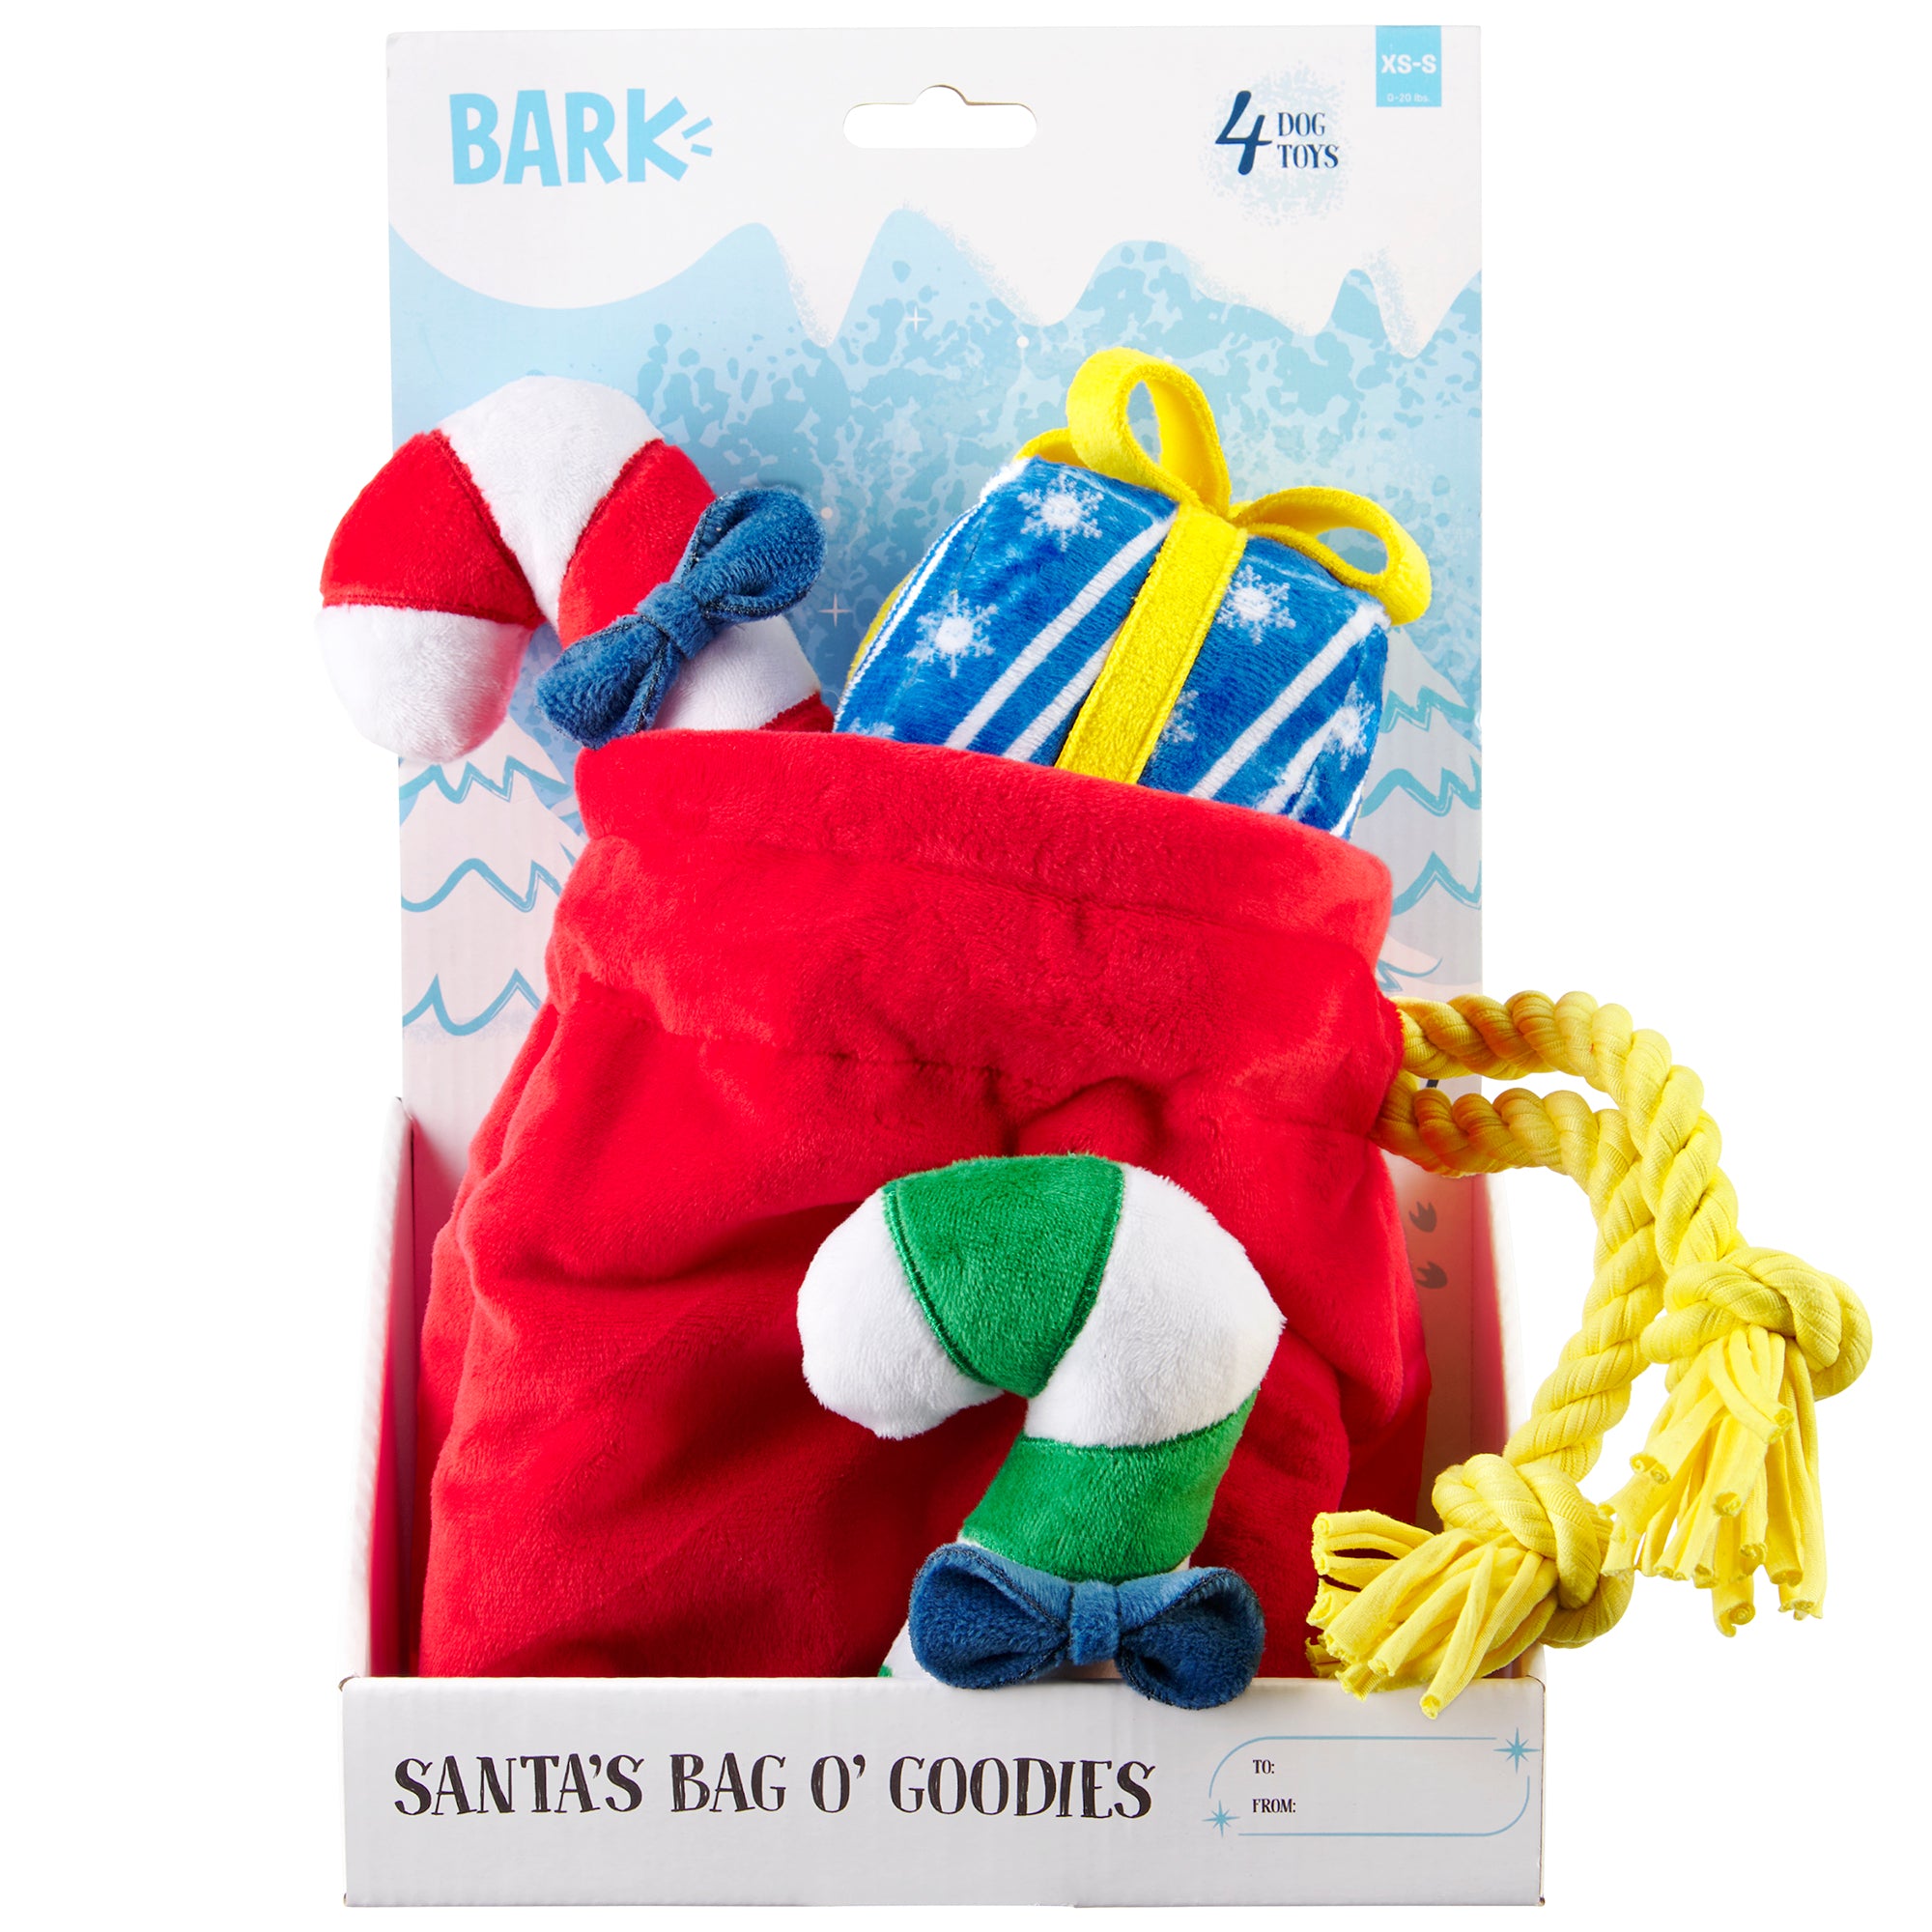 Santa's Bag 'O Goodies